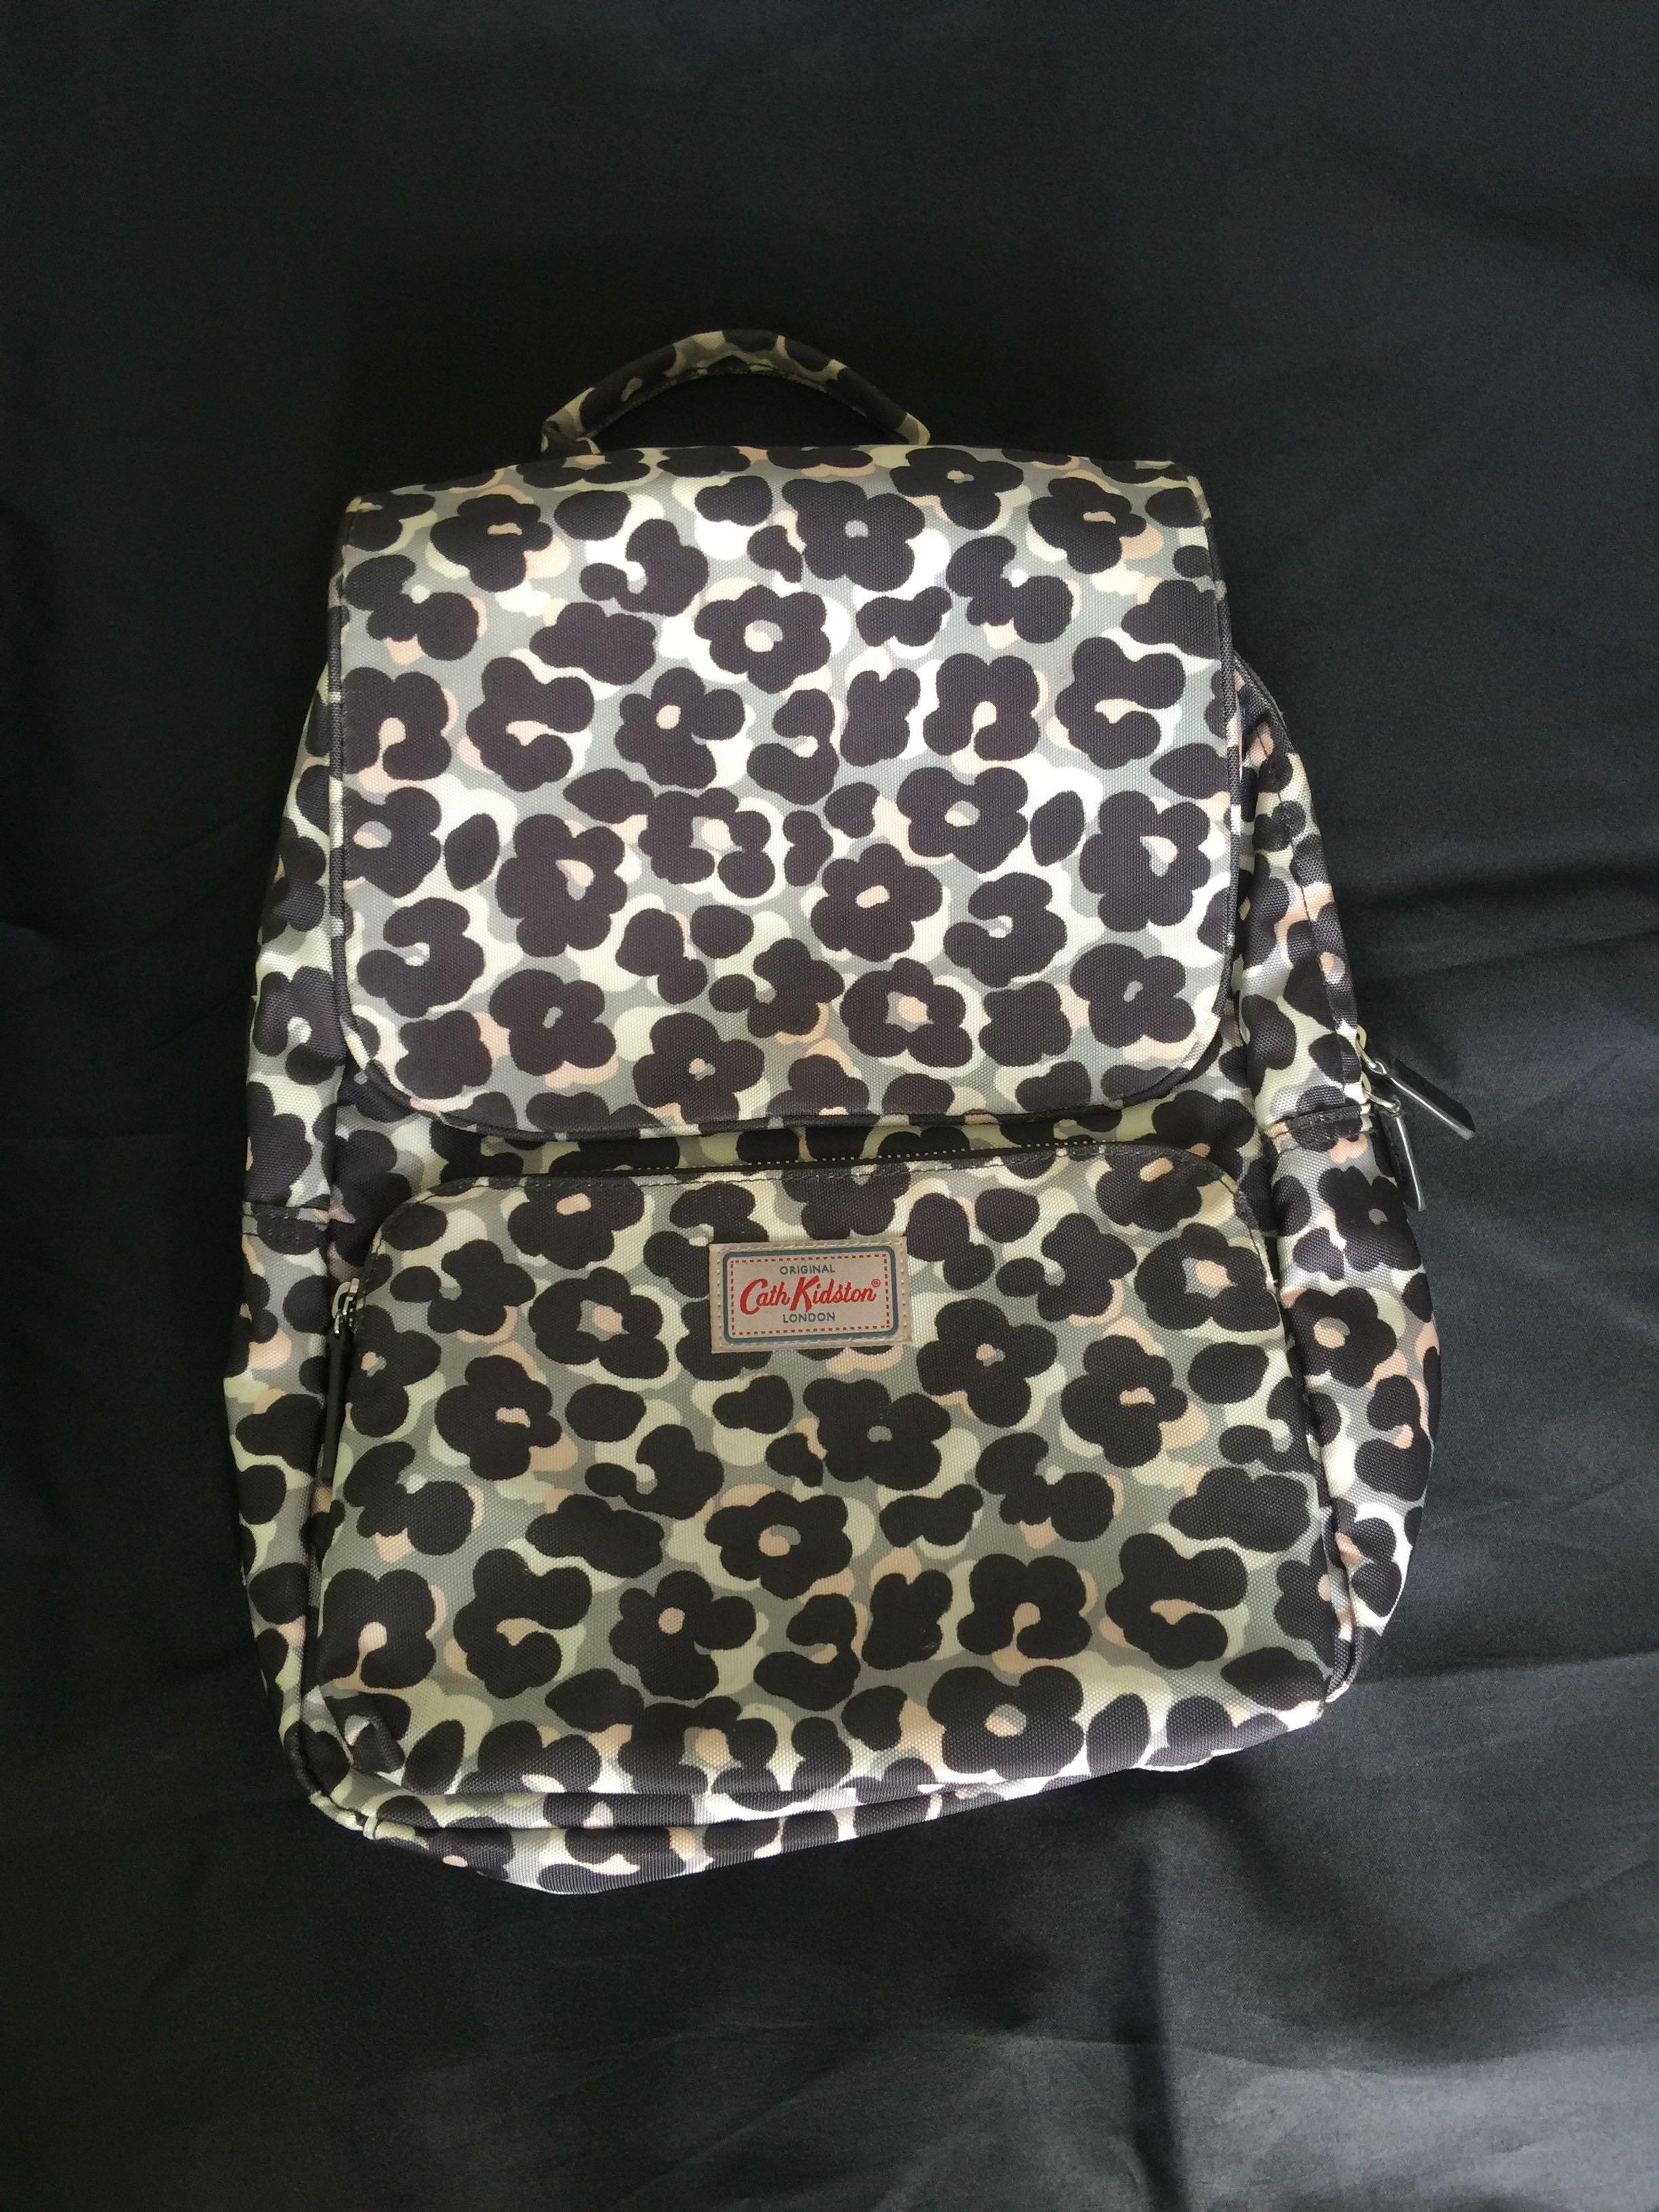 cath kidston leopard backpack